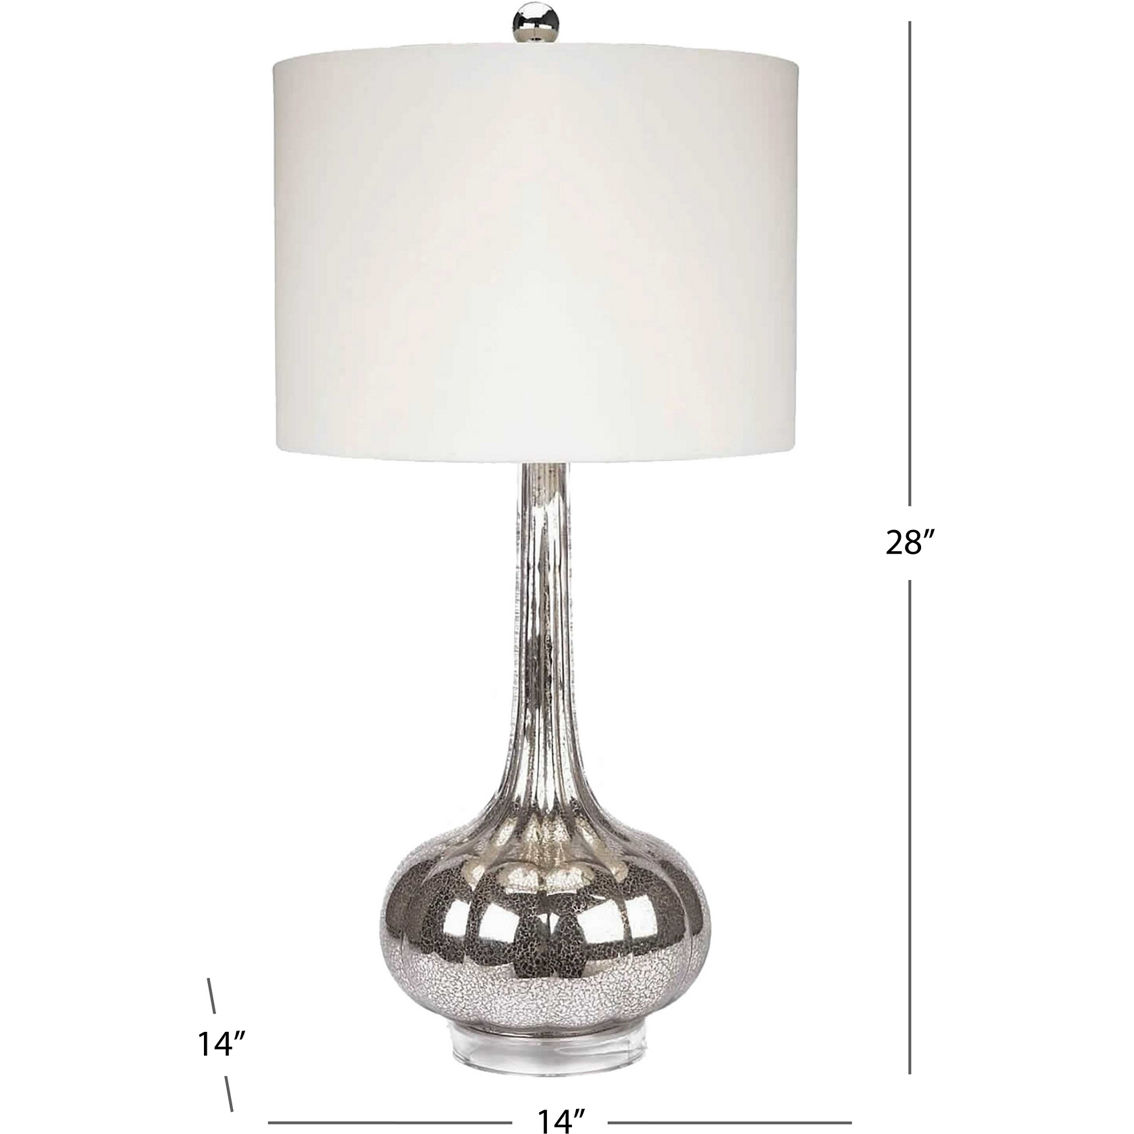 Abbyson Mercury Antiqued Glass Table Lamp Set 2 pc. - Image 4 of 4